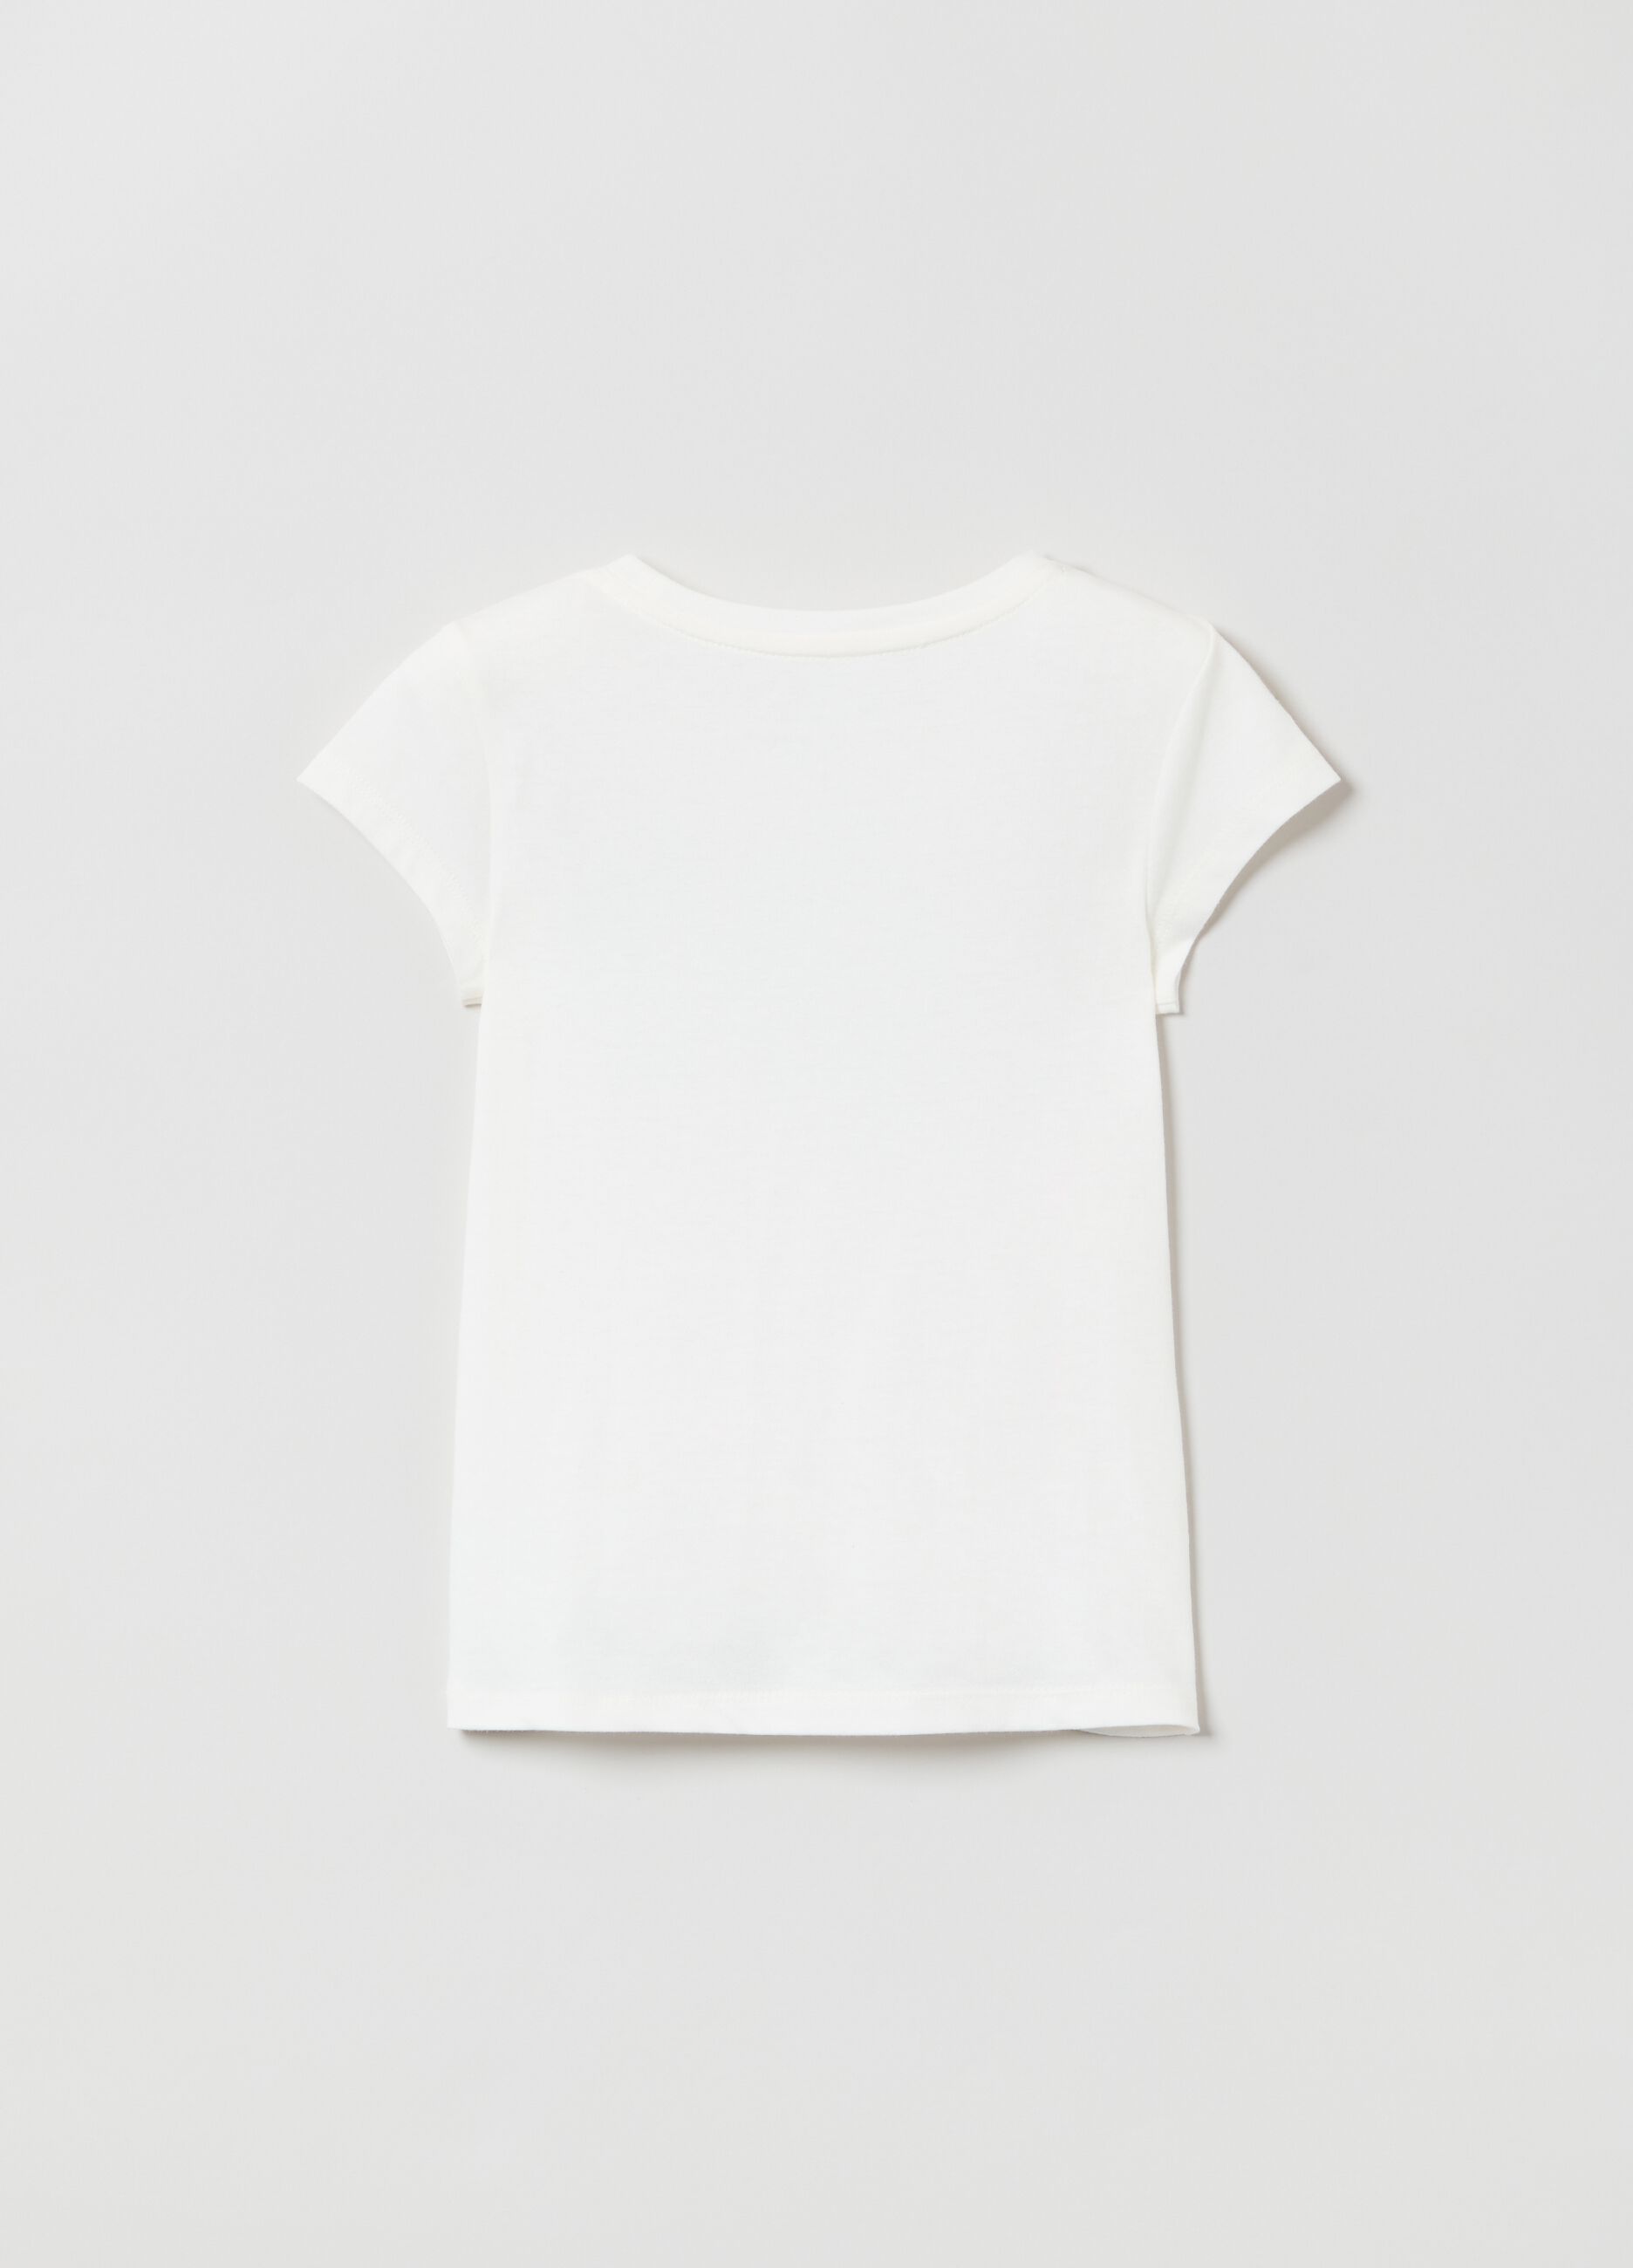 T-shirt in cotone con stampa logo in foil_1